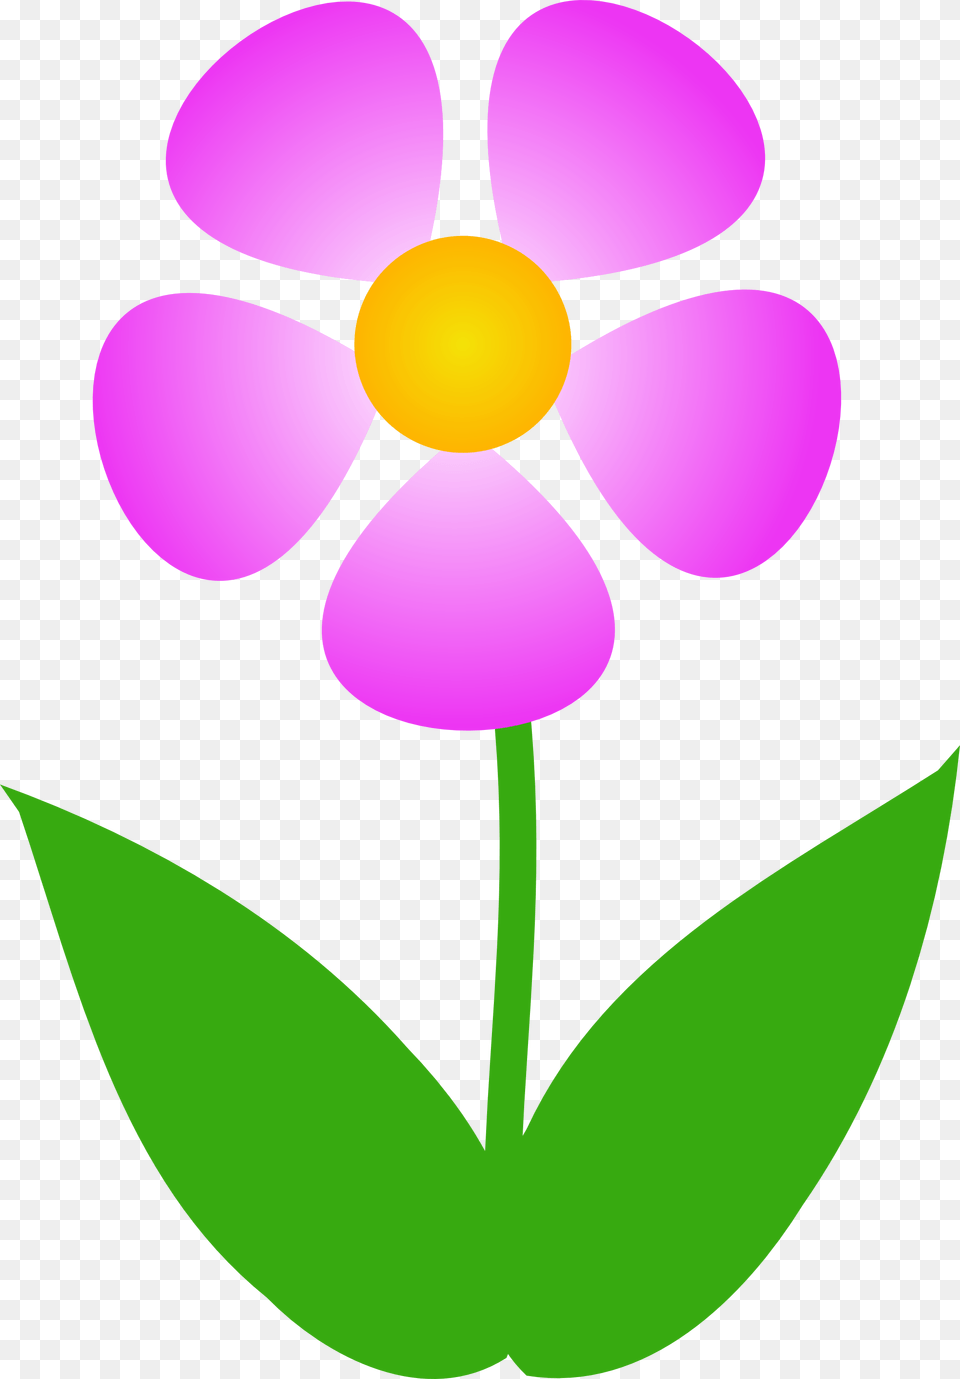 Clipart Images Of Flowers Flower Clip Art Pictures Anemone, Daisy, Petal, Plant Png Image